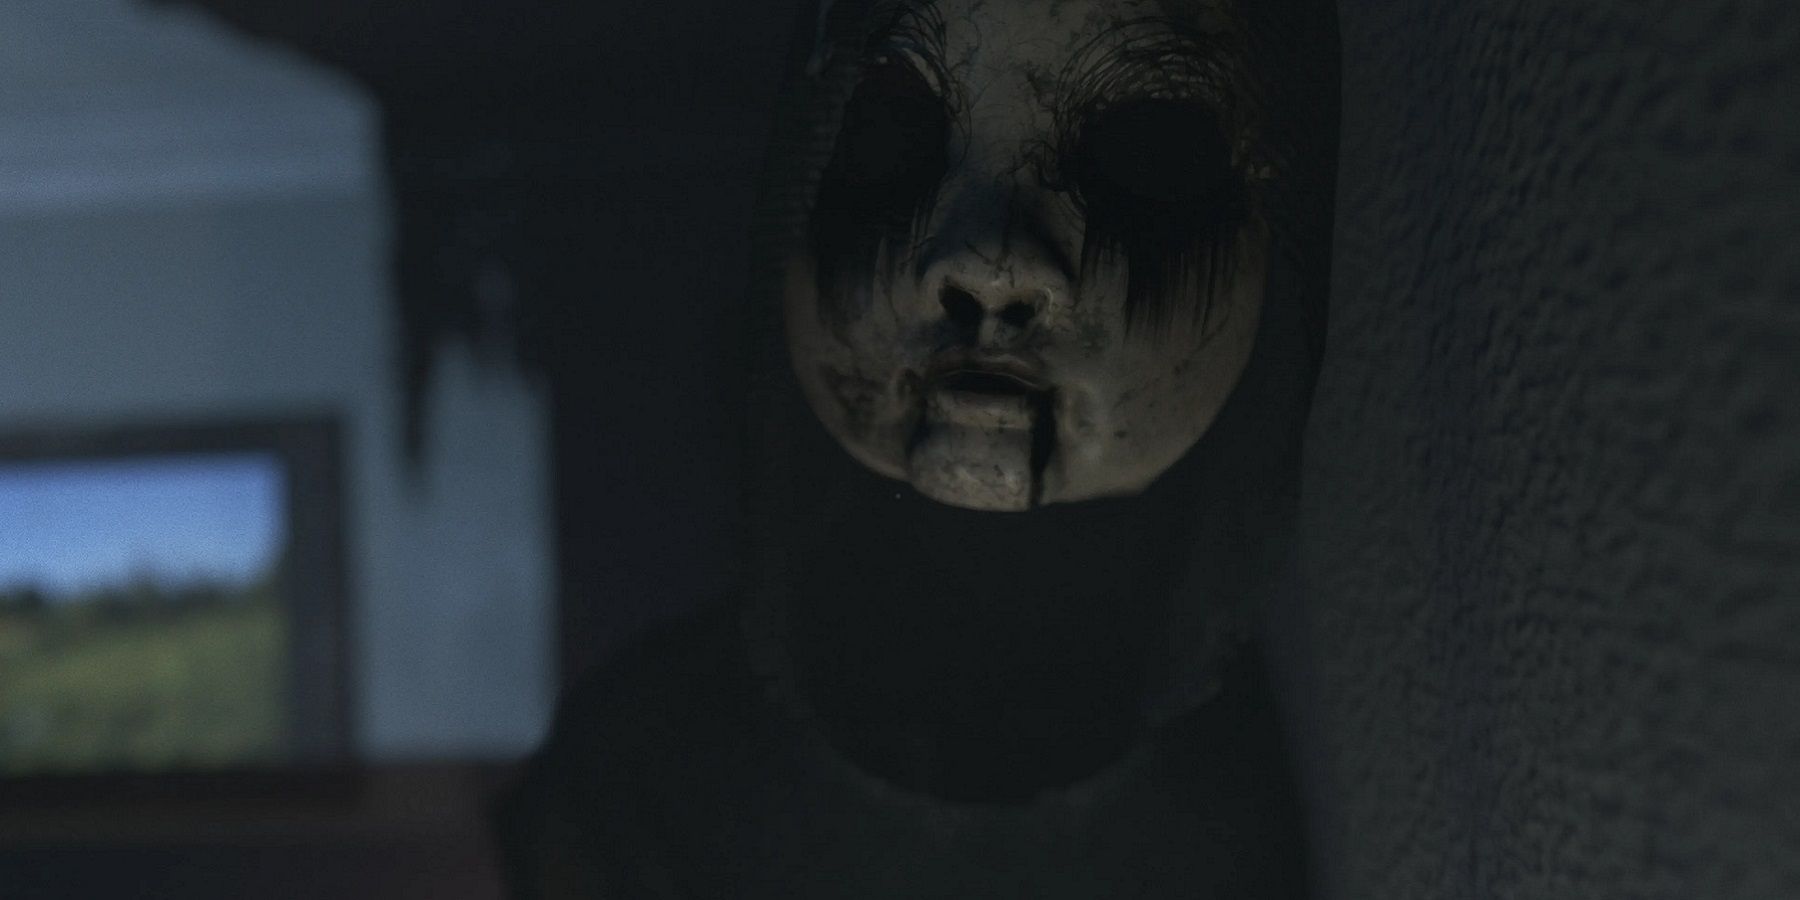 visage horror game trailer